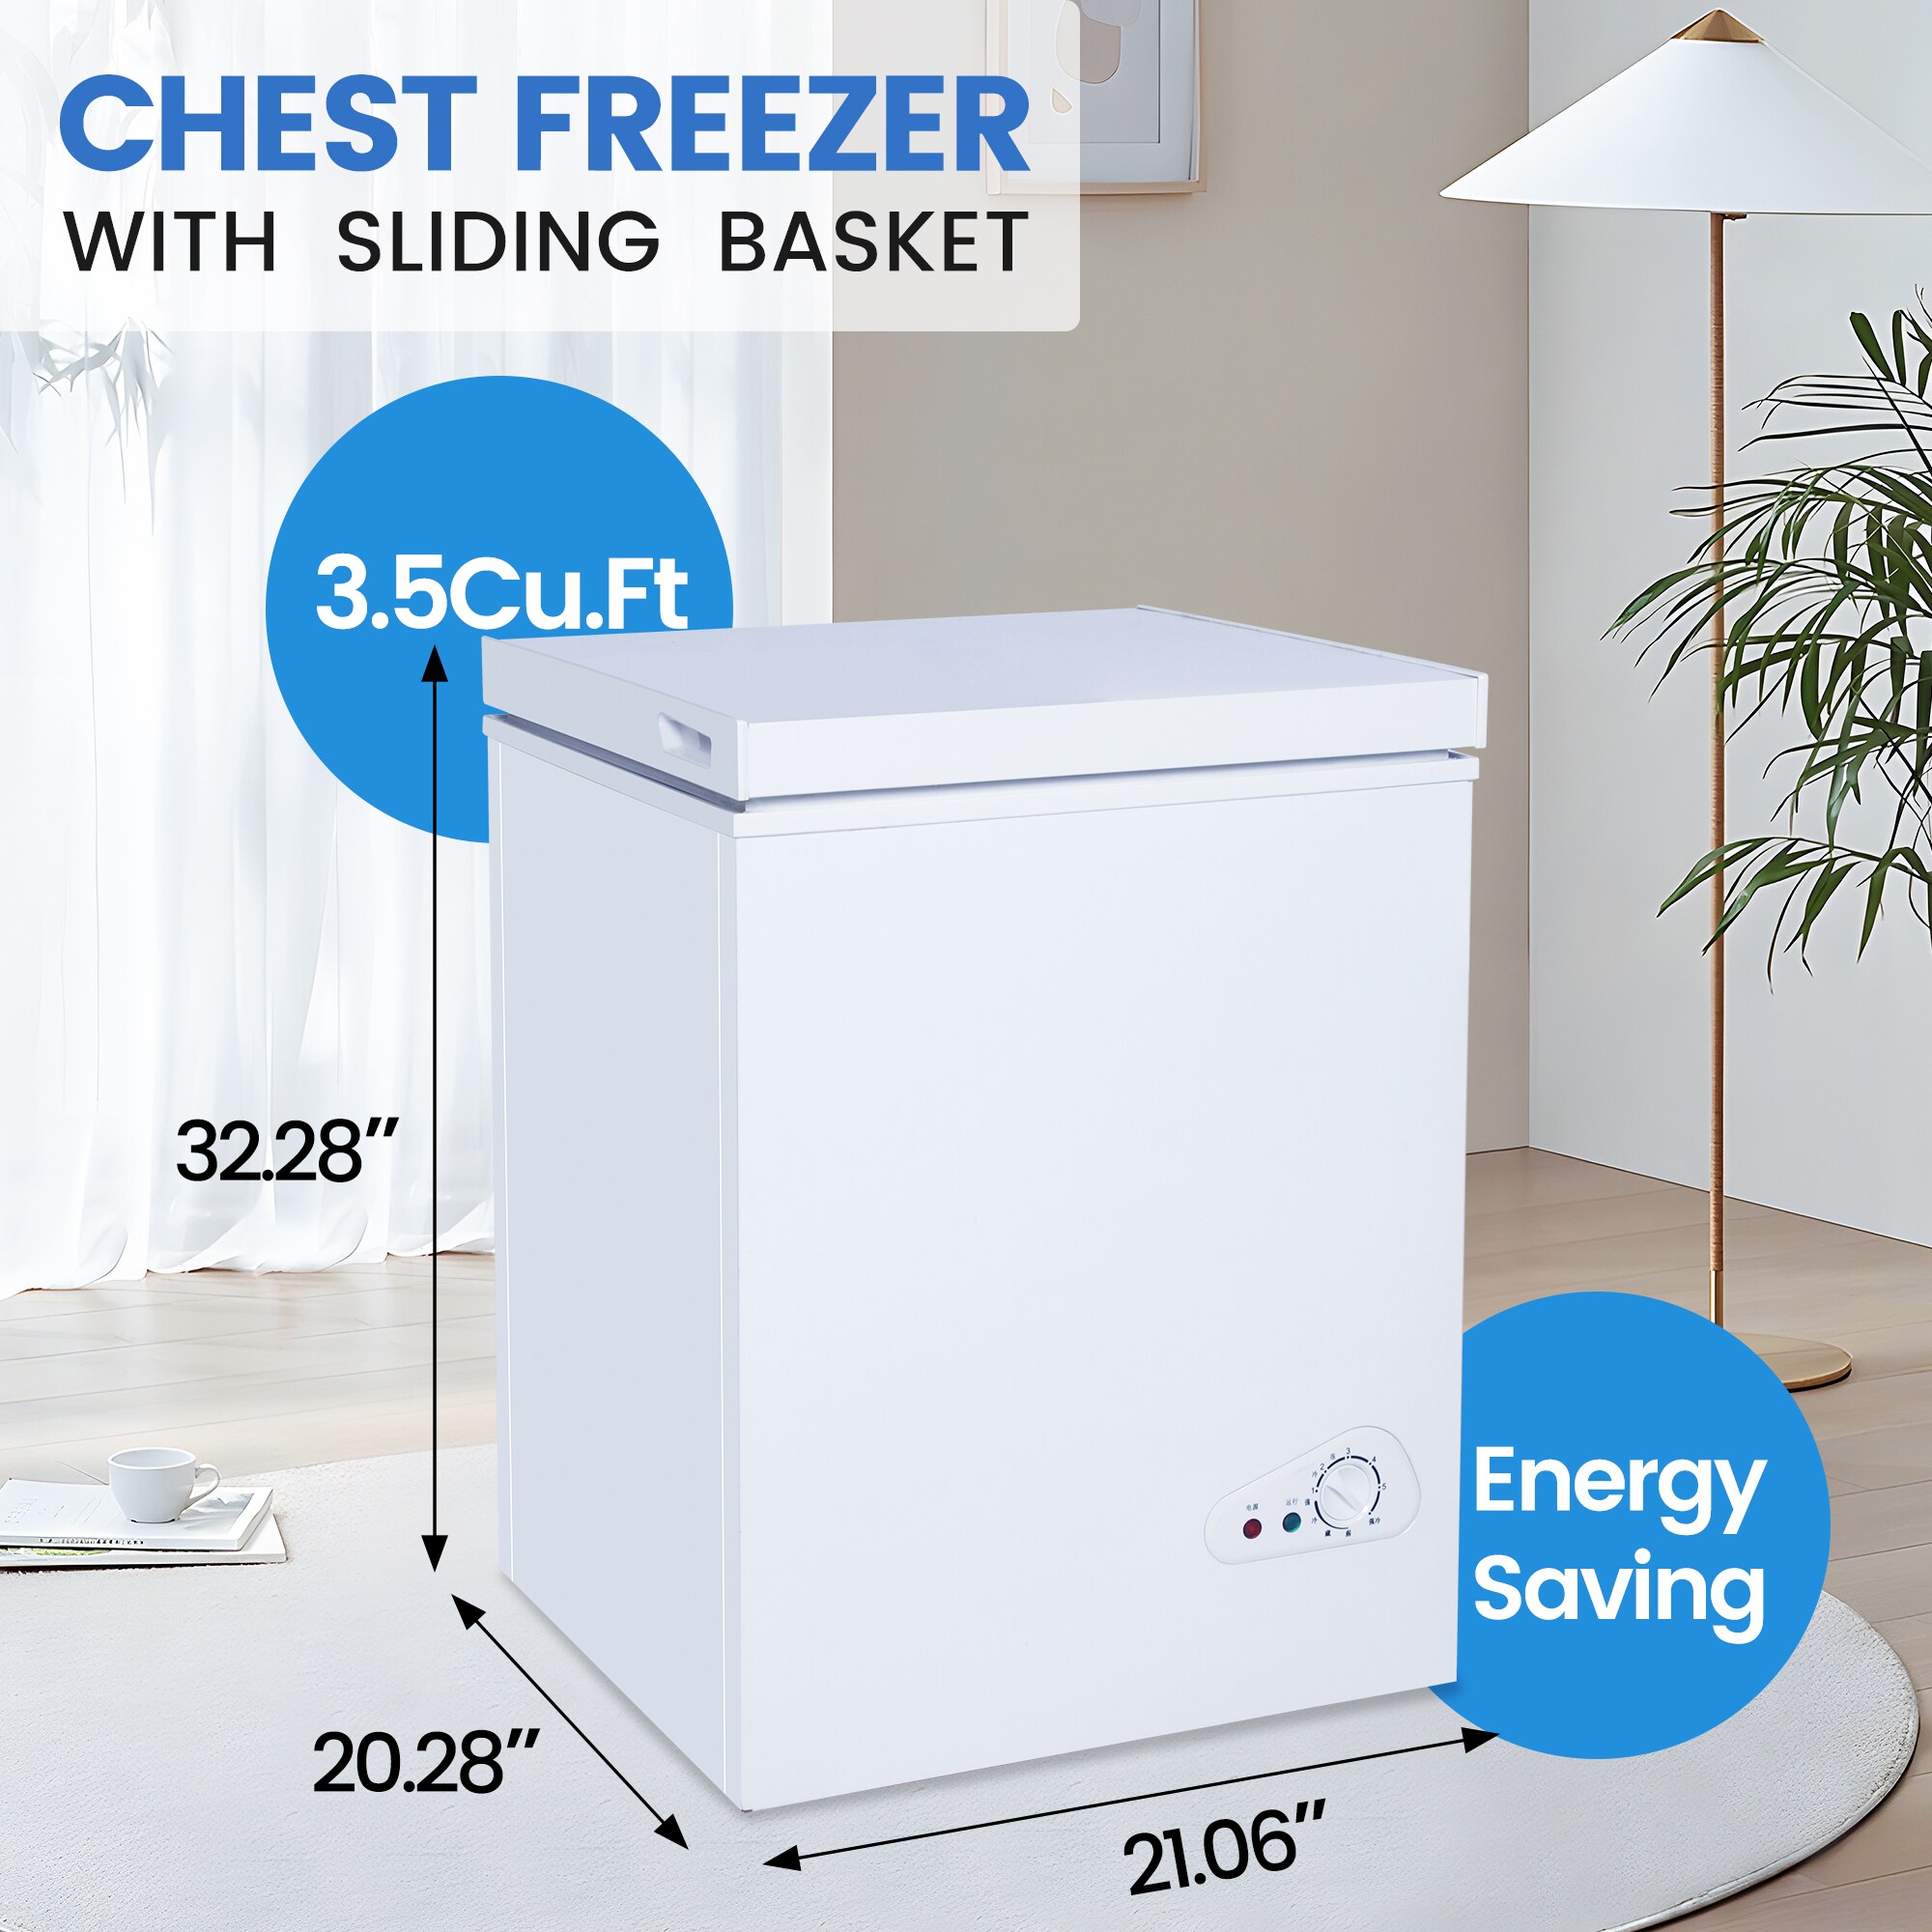 Jeremy Cass 3.5-cu ft Manual Defrost Chest Freezer (White) ENERGY